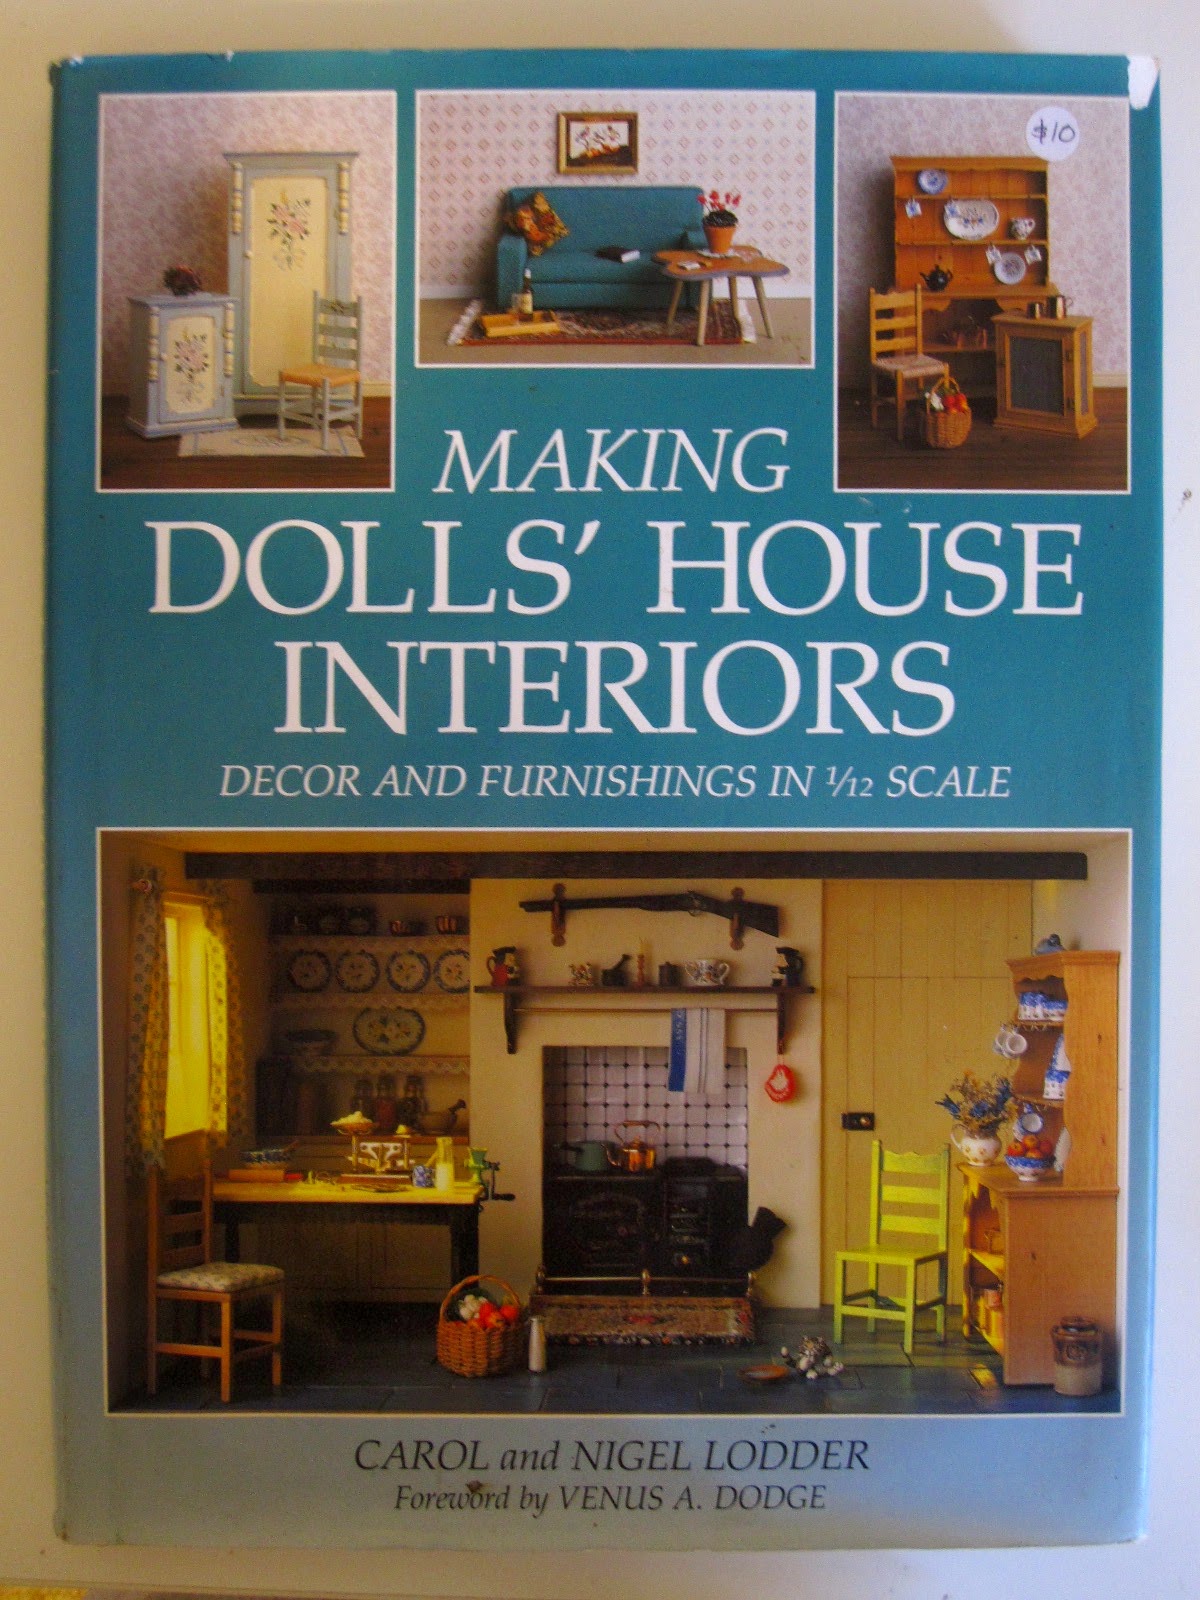 'Making dolls' house interiors' book